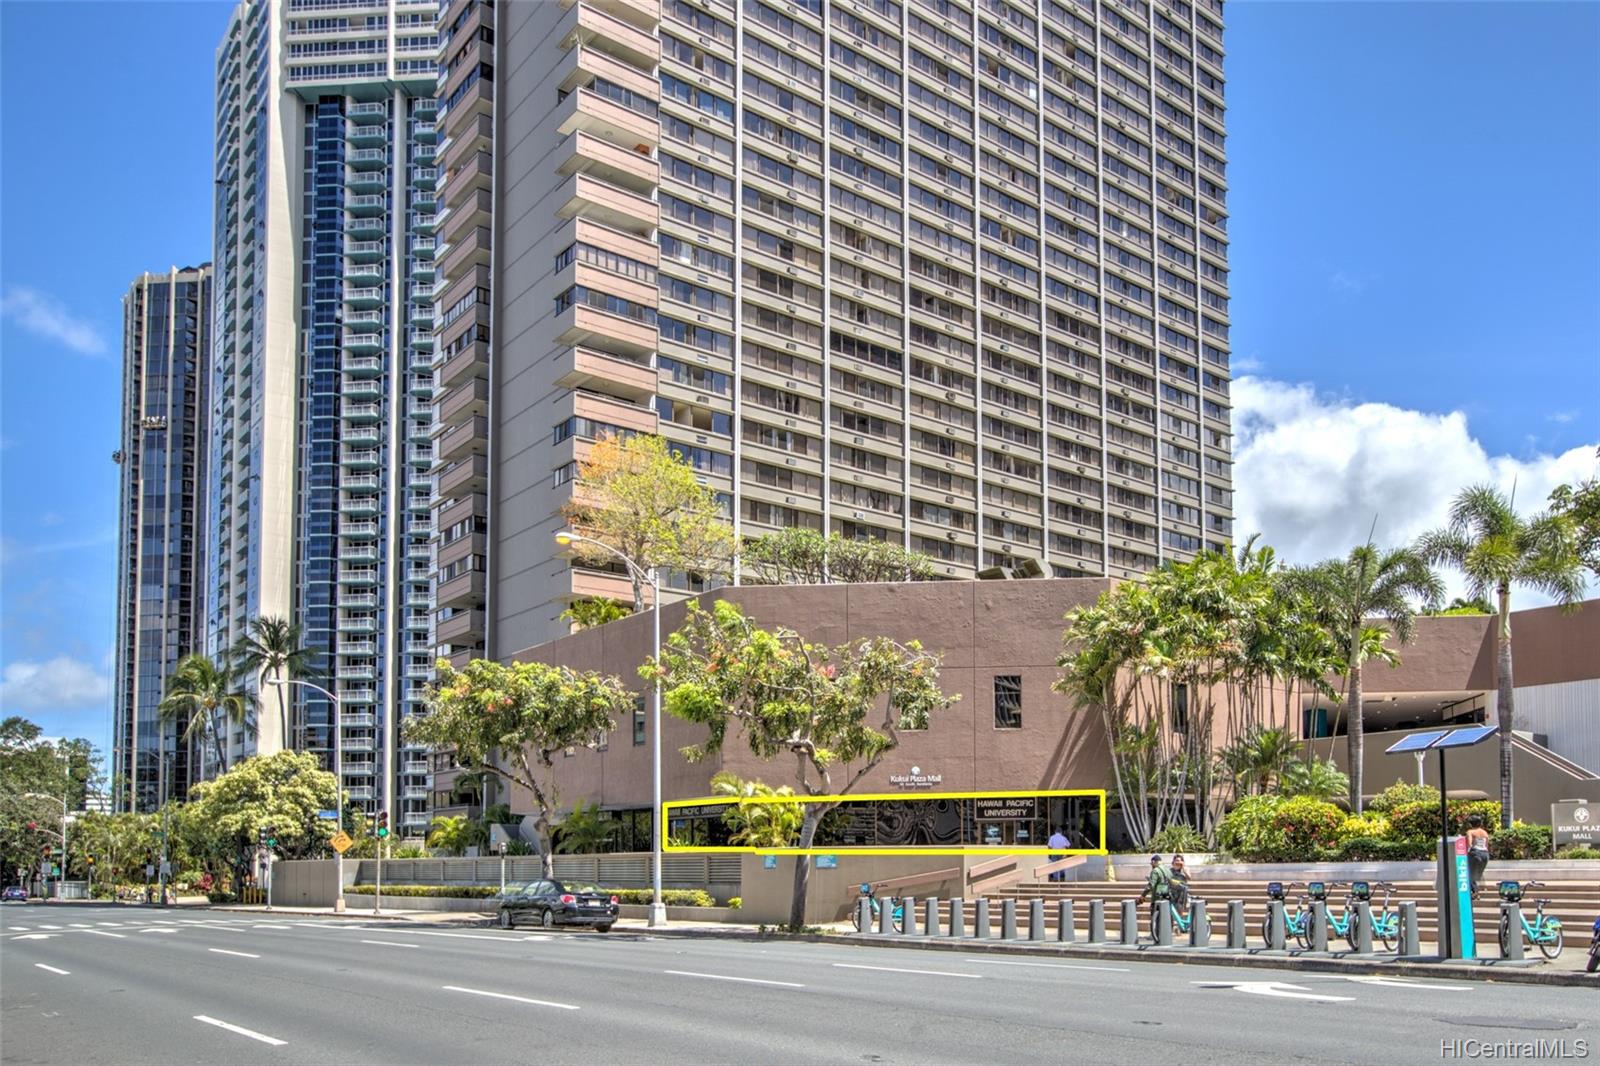 50 Beretania Street Honolulu Oahu commercial real estate photo12 of 16